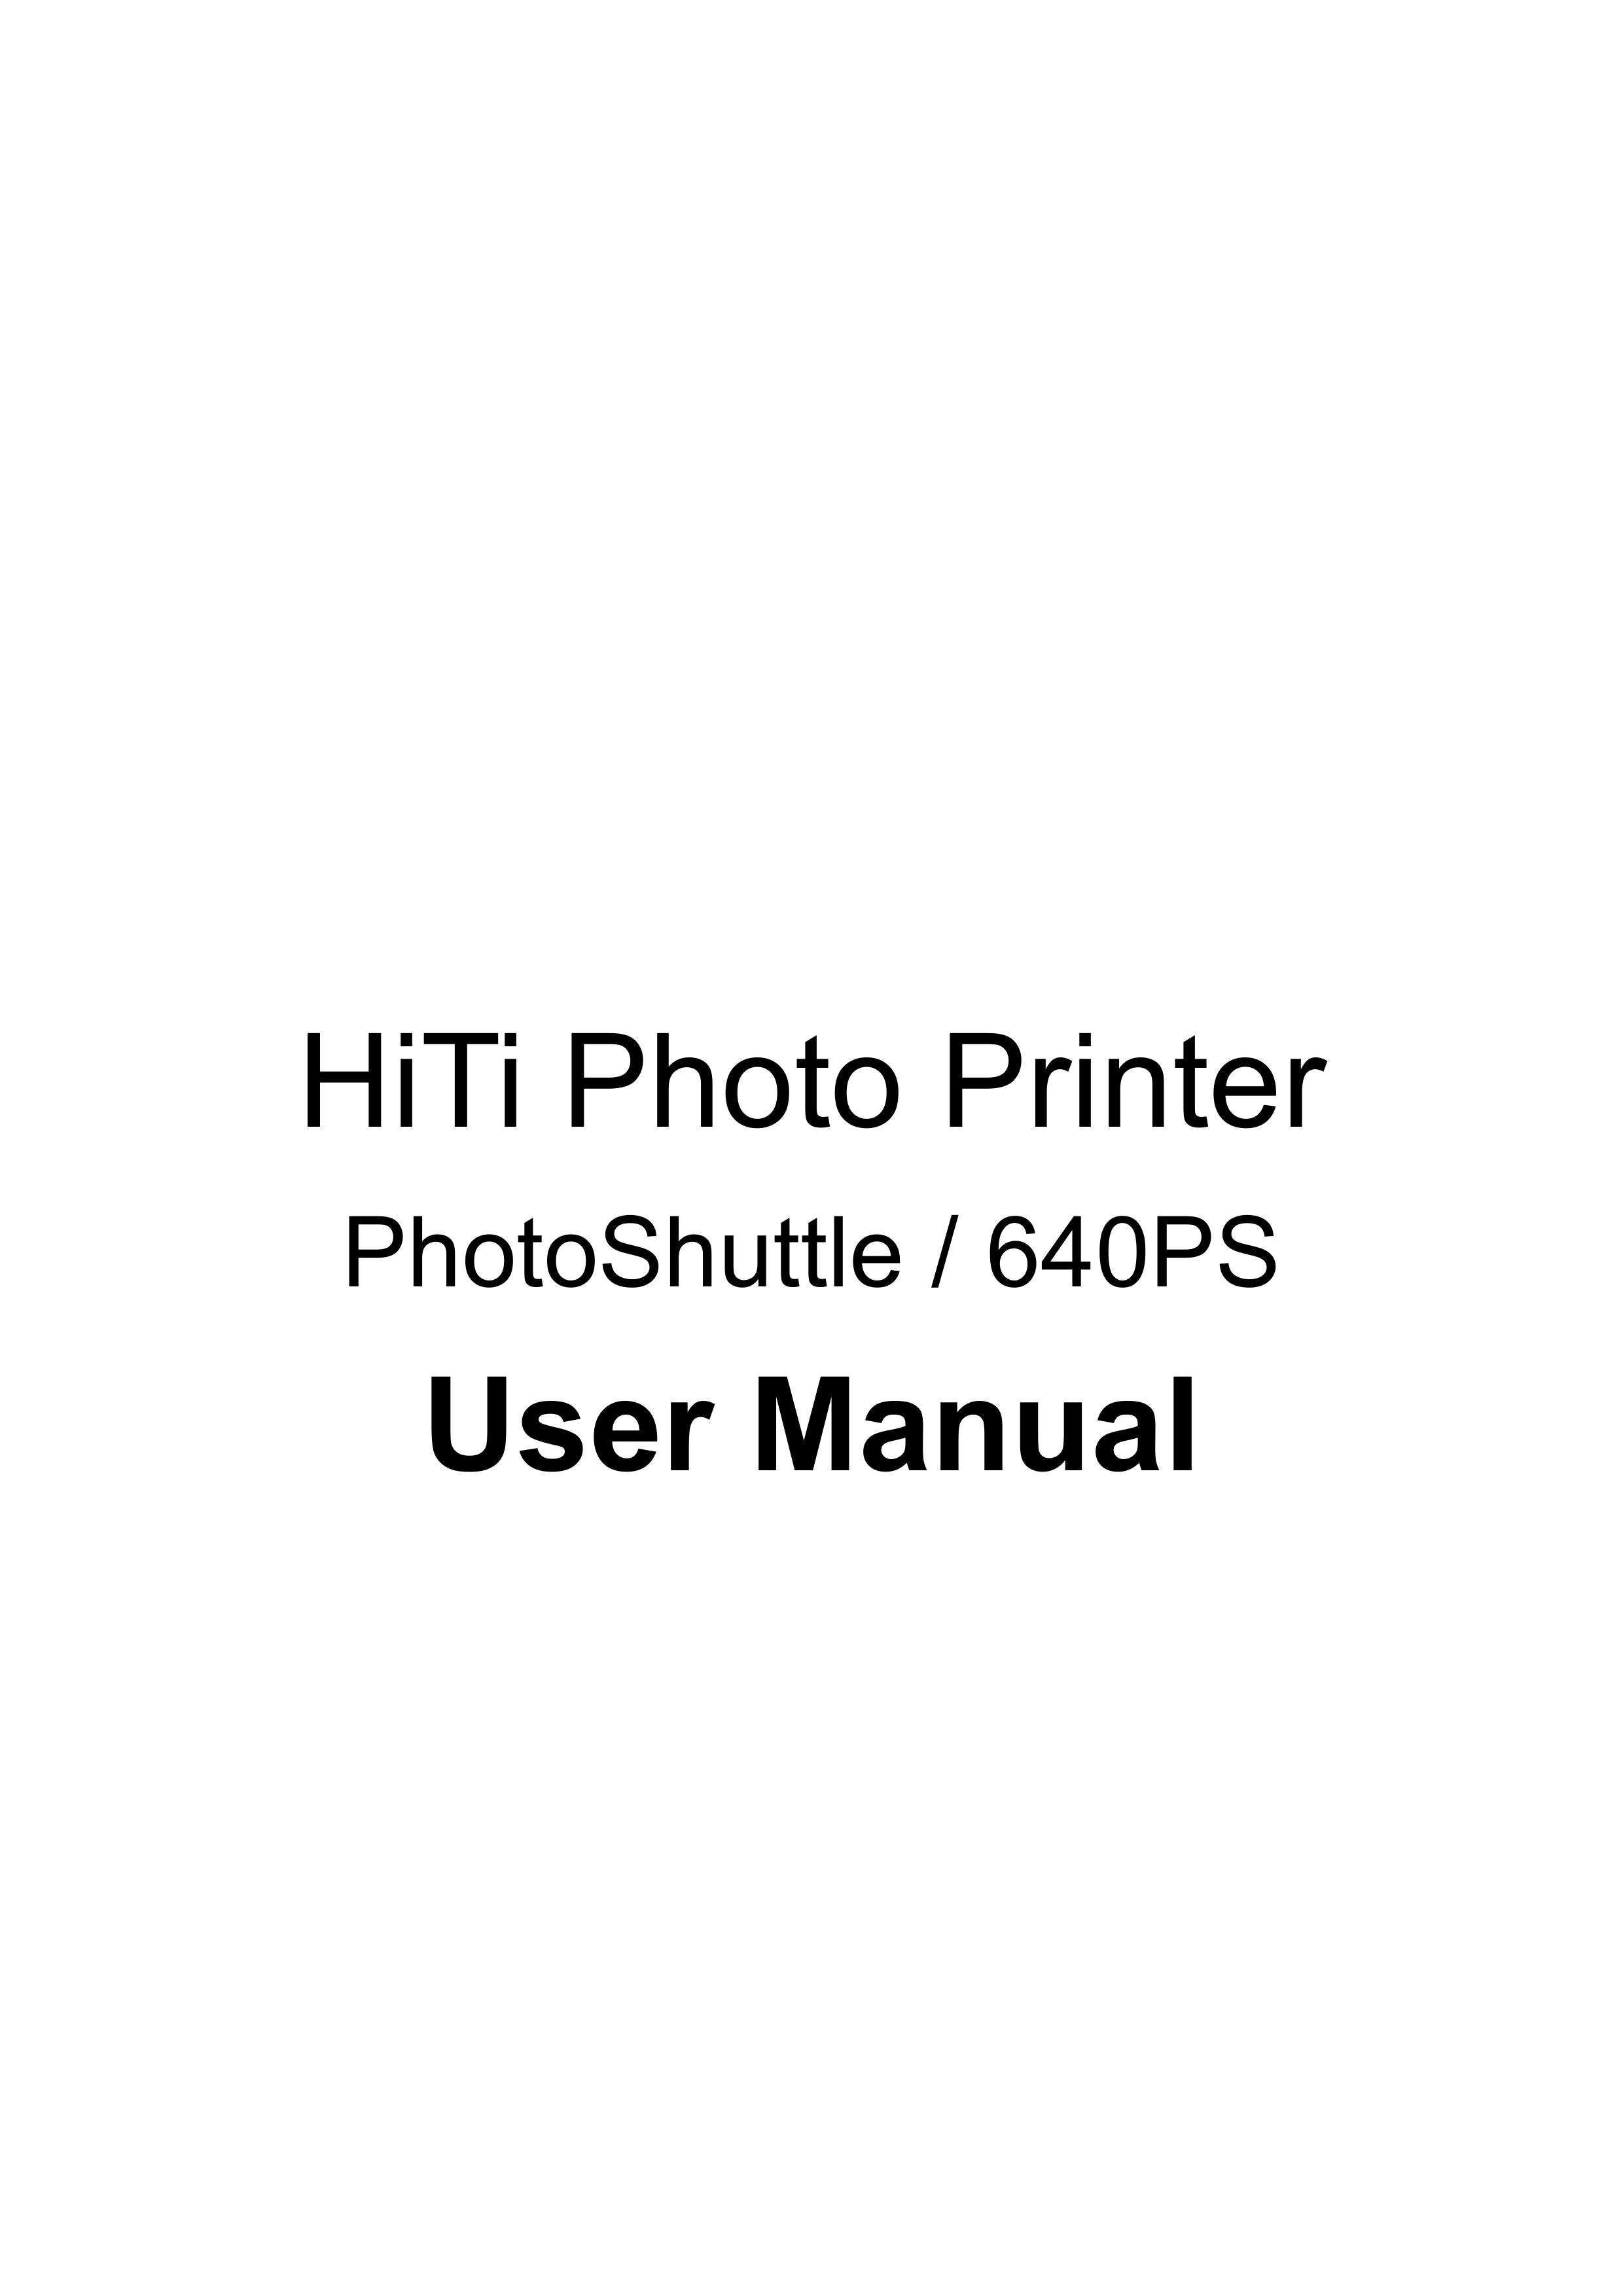 Hi-Touch Imaging Technologies 640PS Photo Printer User Manual